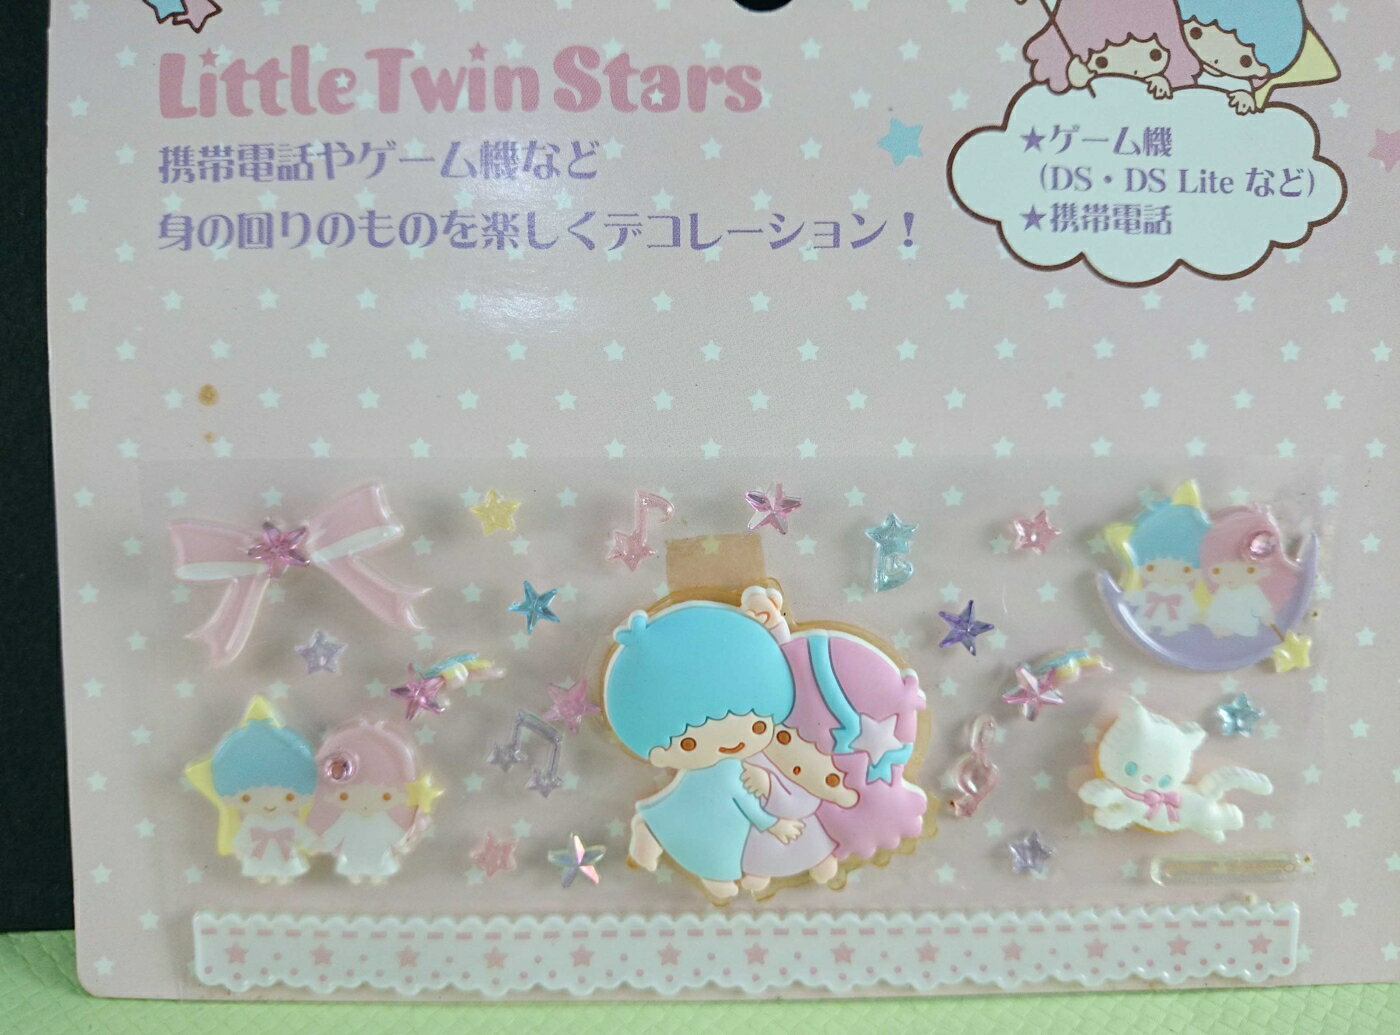 【震撼精品百貨】Little Twin Stars KiKi&LaLa 雙子星小天使 DIY貼紙 震撼日式精品百貨